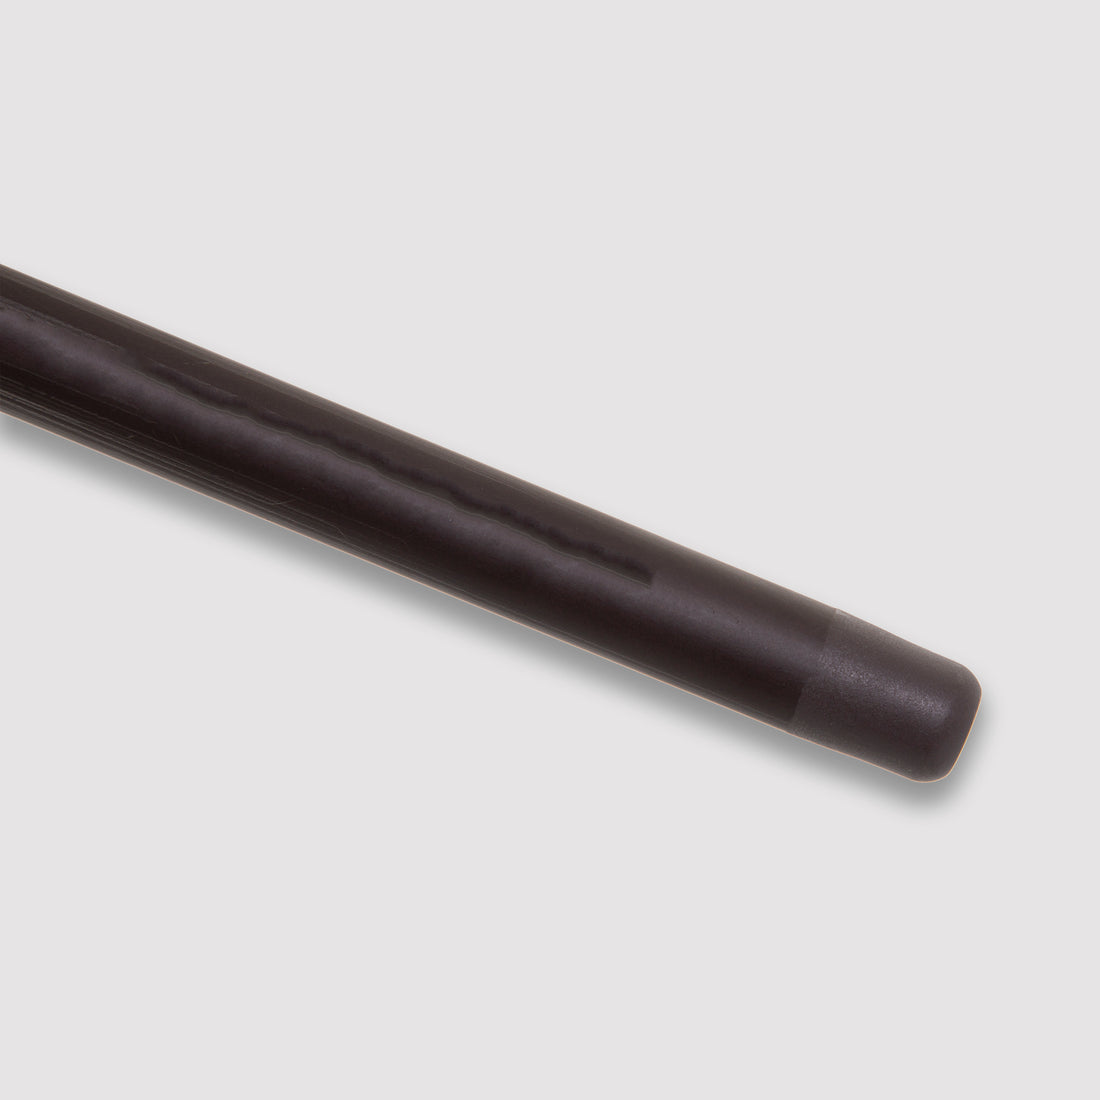 Shinsakuto SKS21 ceramic sharpening rod - 21 cm,no handle -, Sharpening  Rods